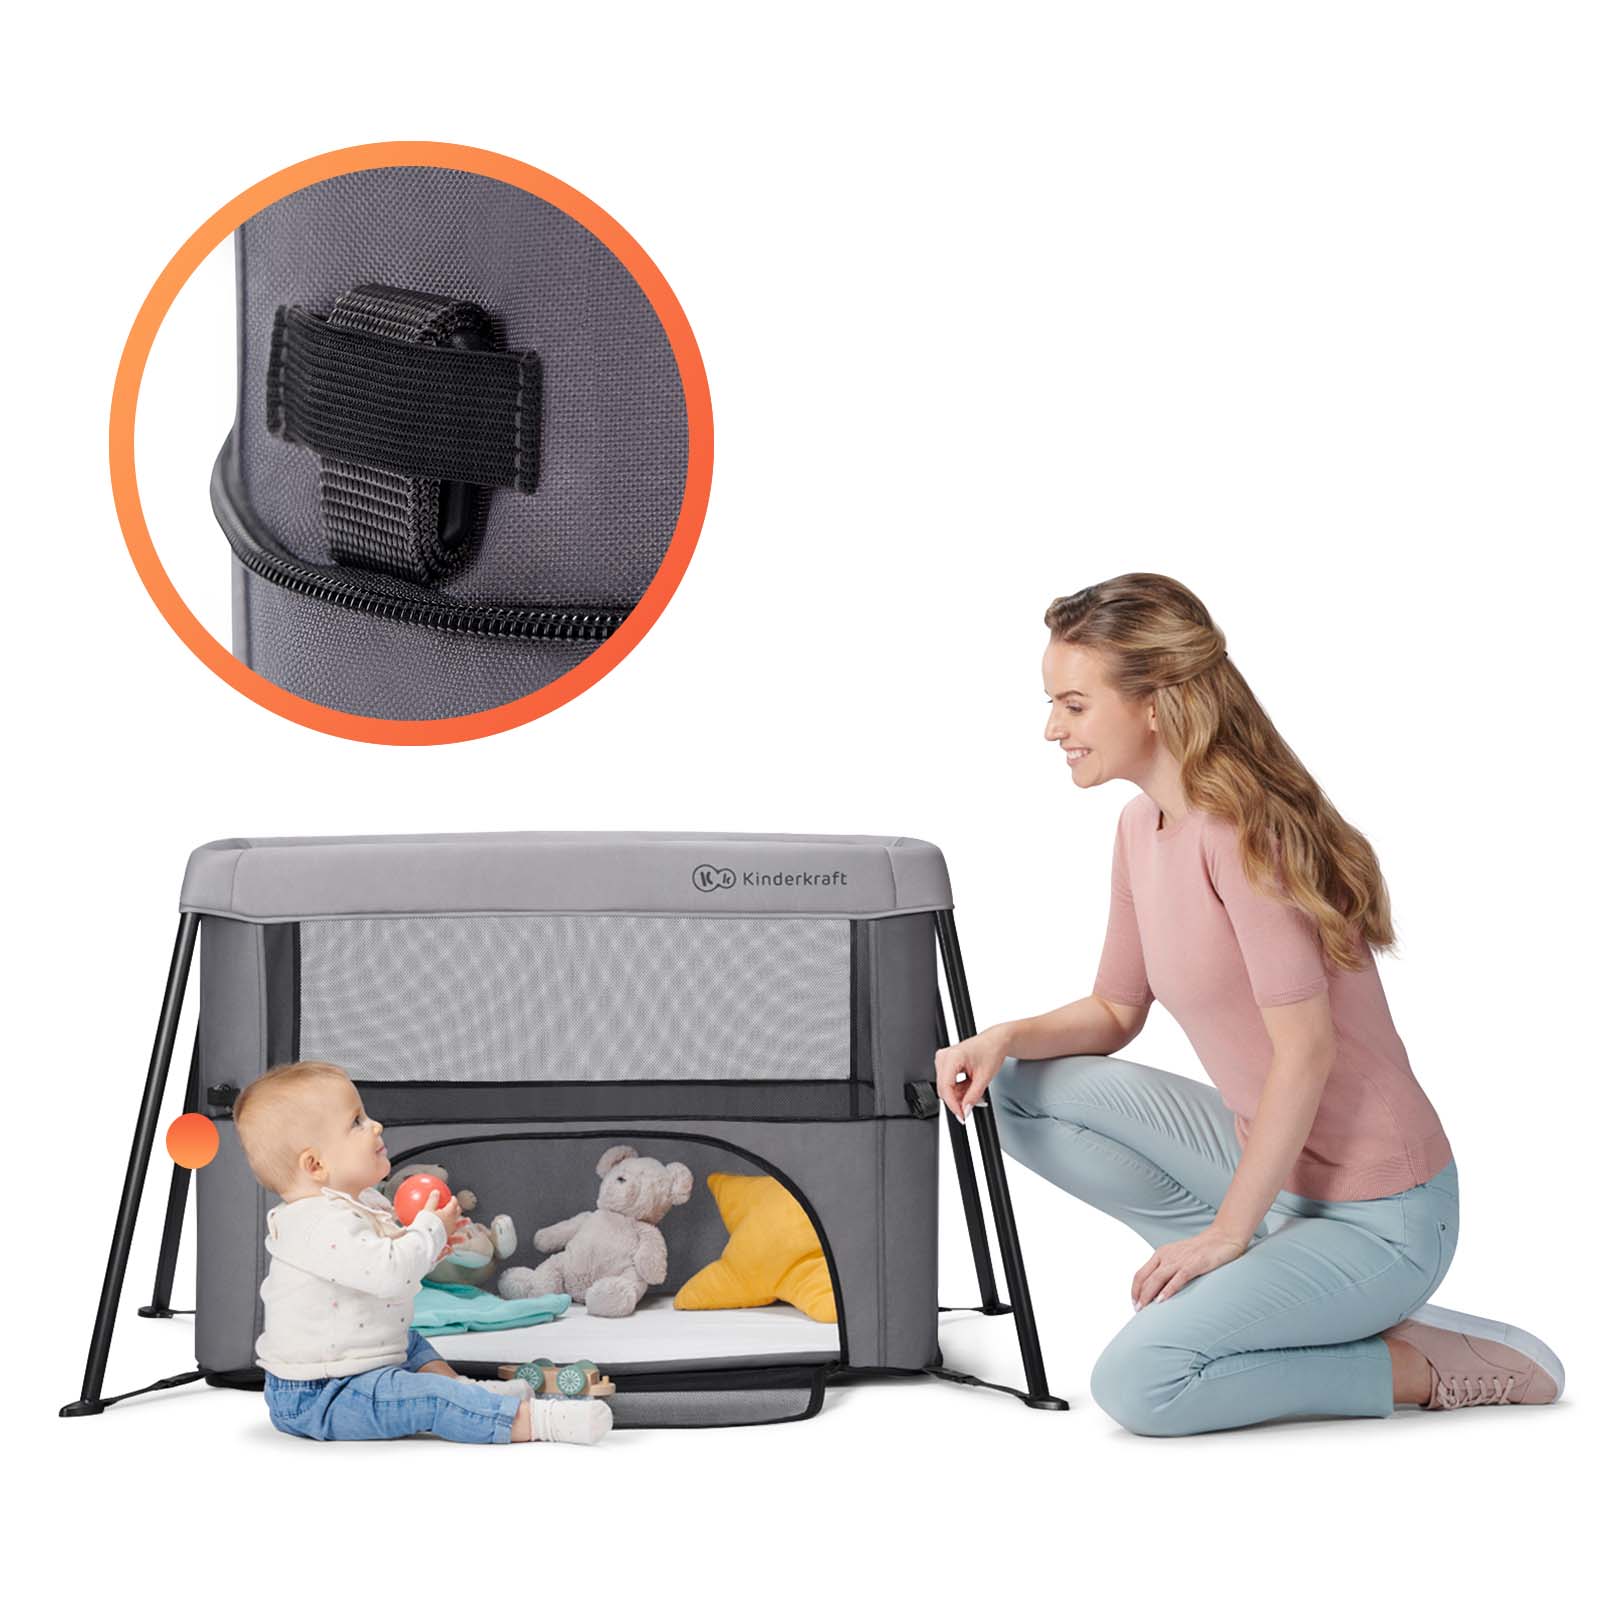  Kinderkraft Mimi Portable Baby Bouncer, Safe and